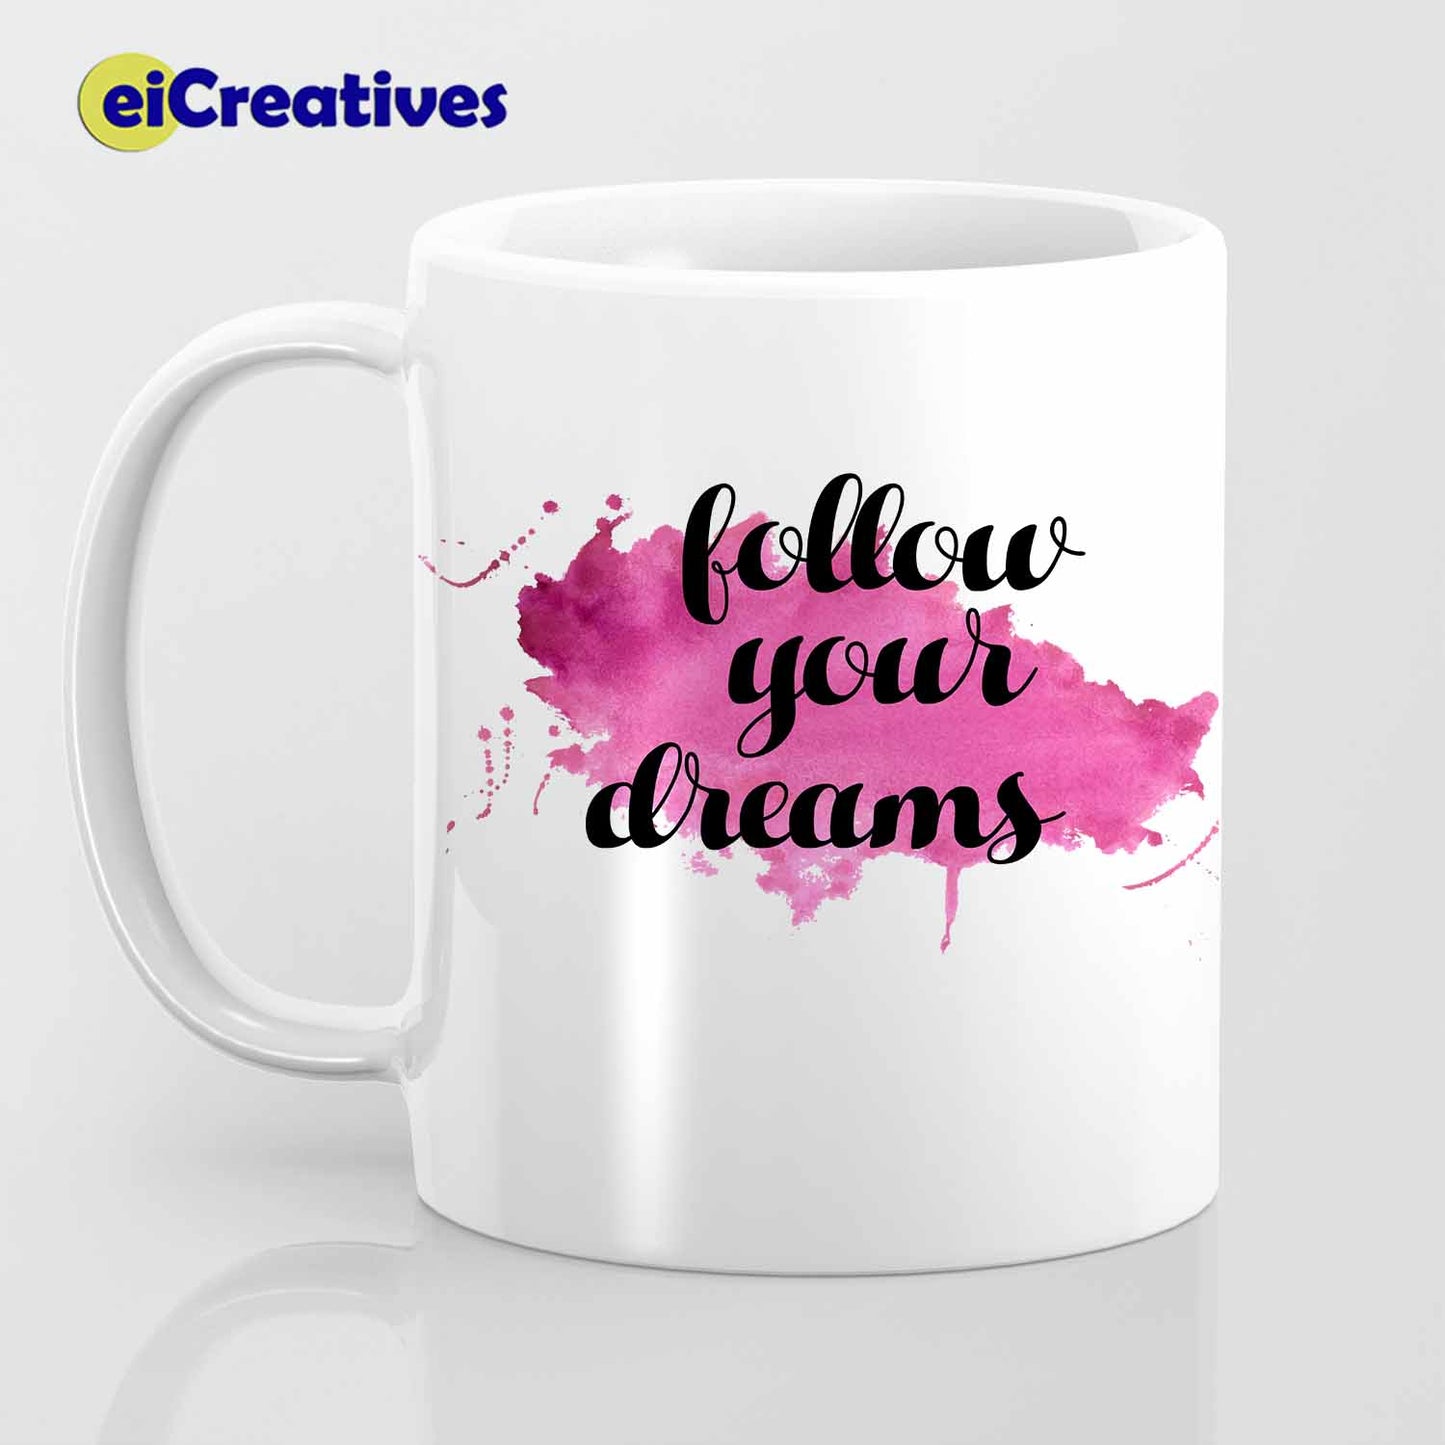 Follow Your Dreams - Mug